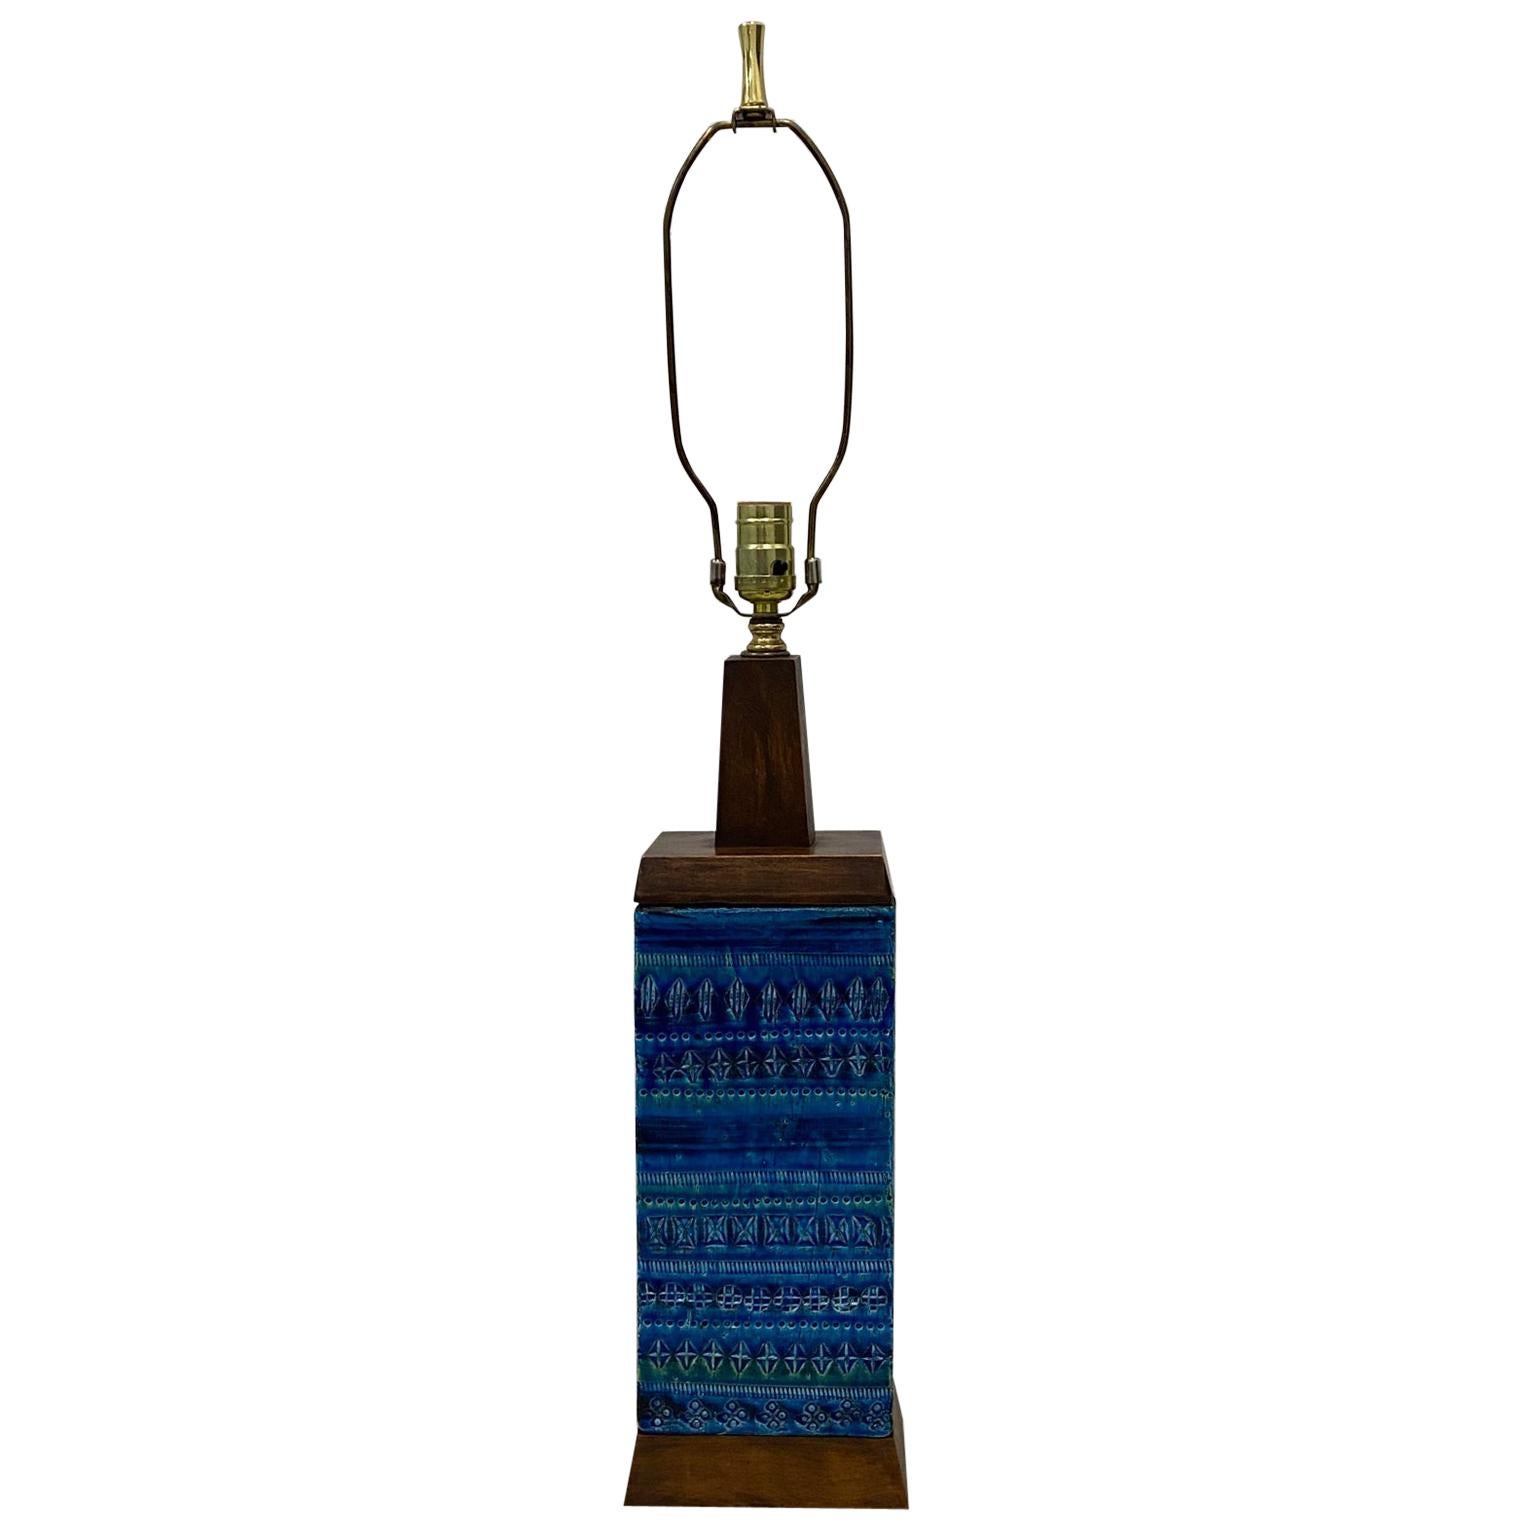 Aldo Londi for Bitossi Rimini Blue Glaze Table Lamp, circa 1960